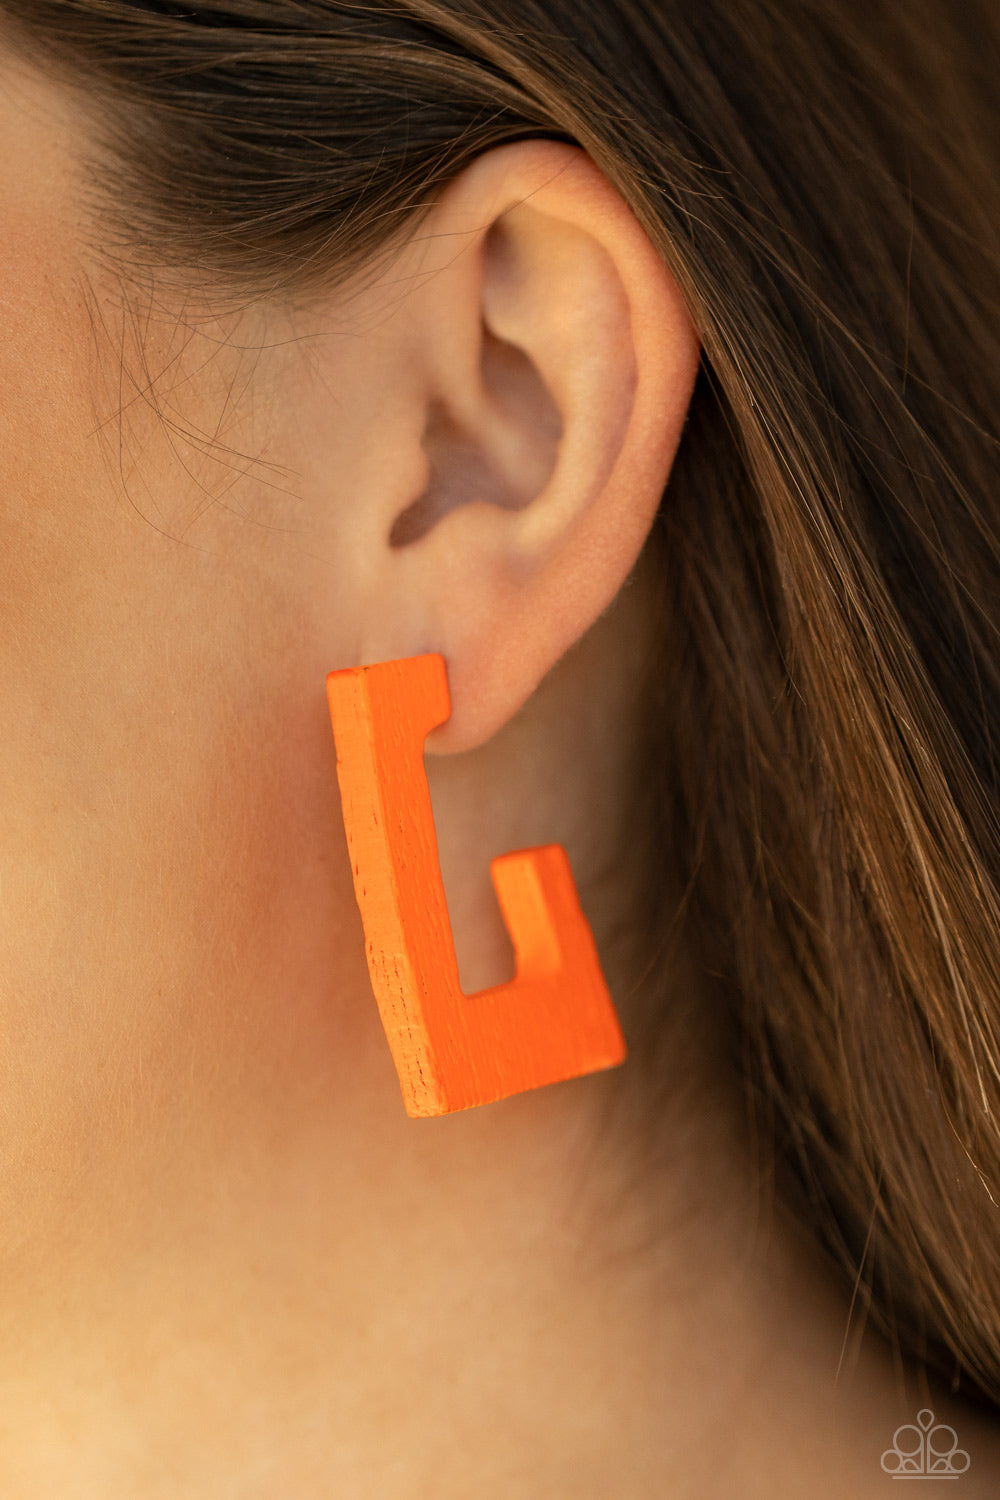 Paparazzi Accessories - The Girl Next OUTDOOR - Orange Earrings